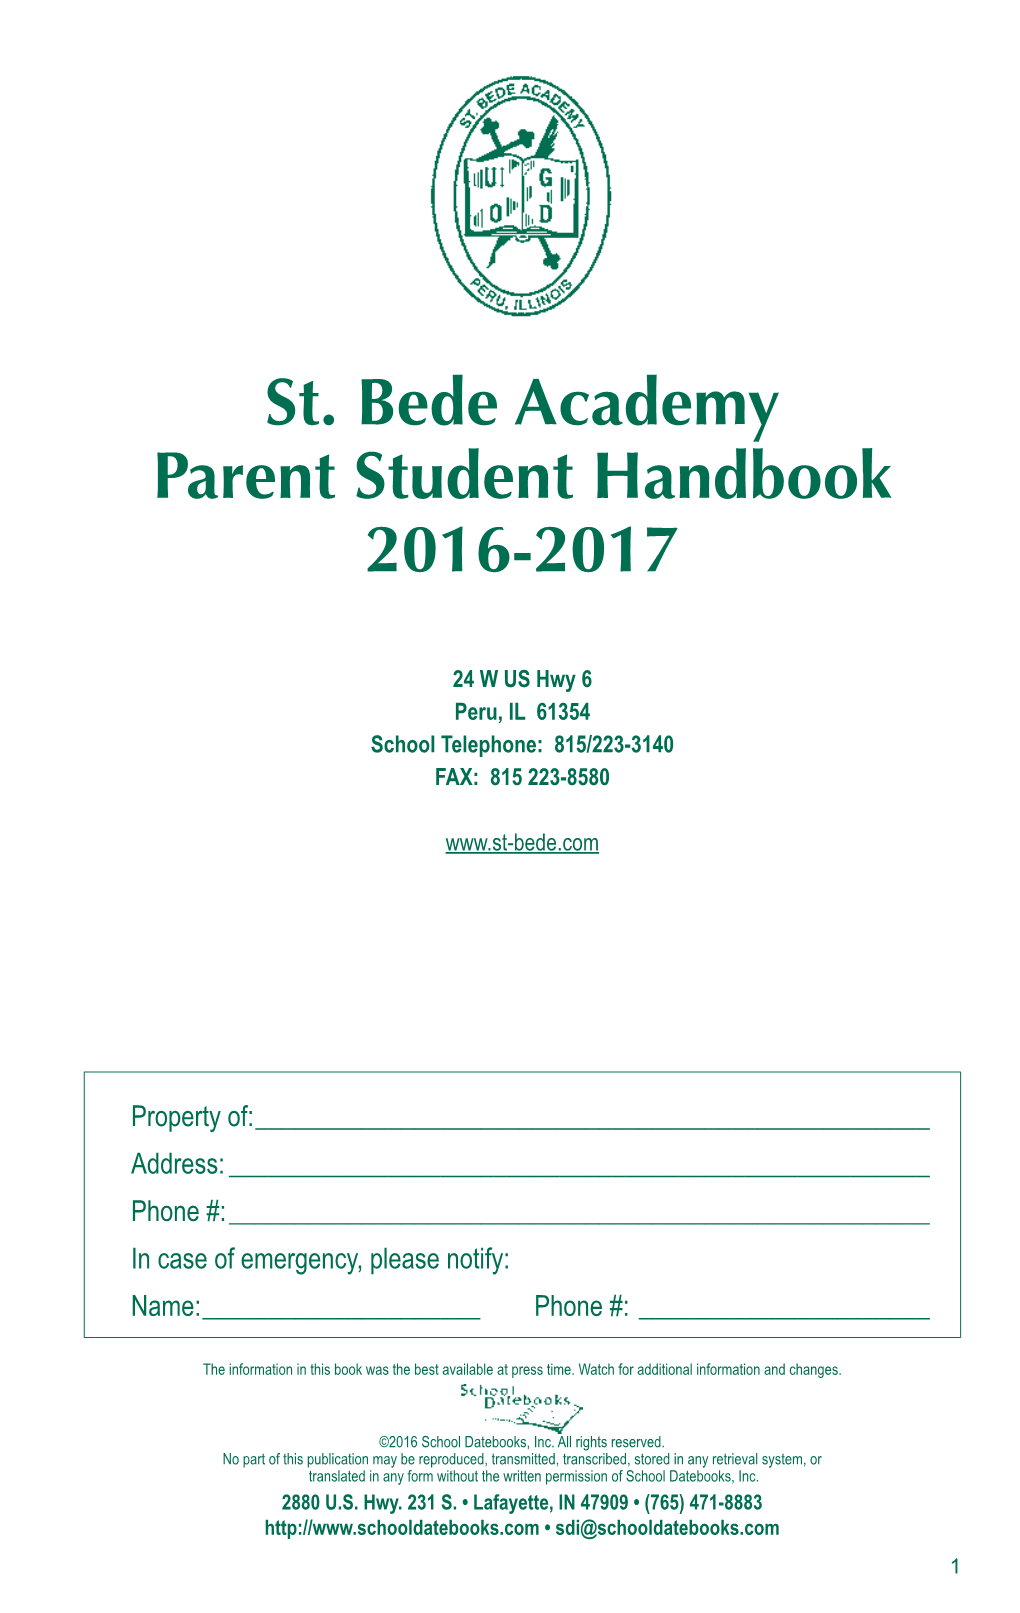 St. Bede Academy Parent Student Handbook 2016-2017